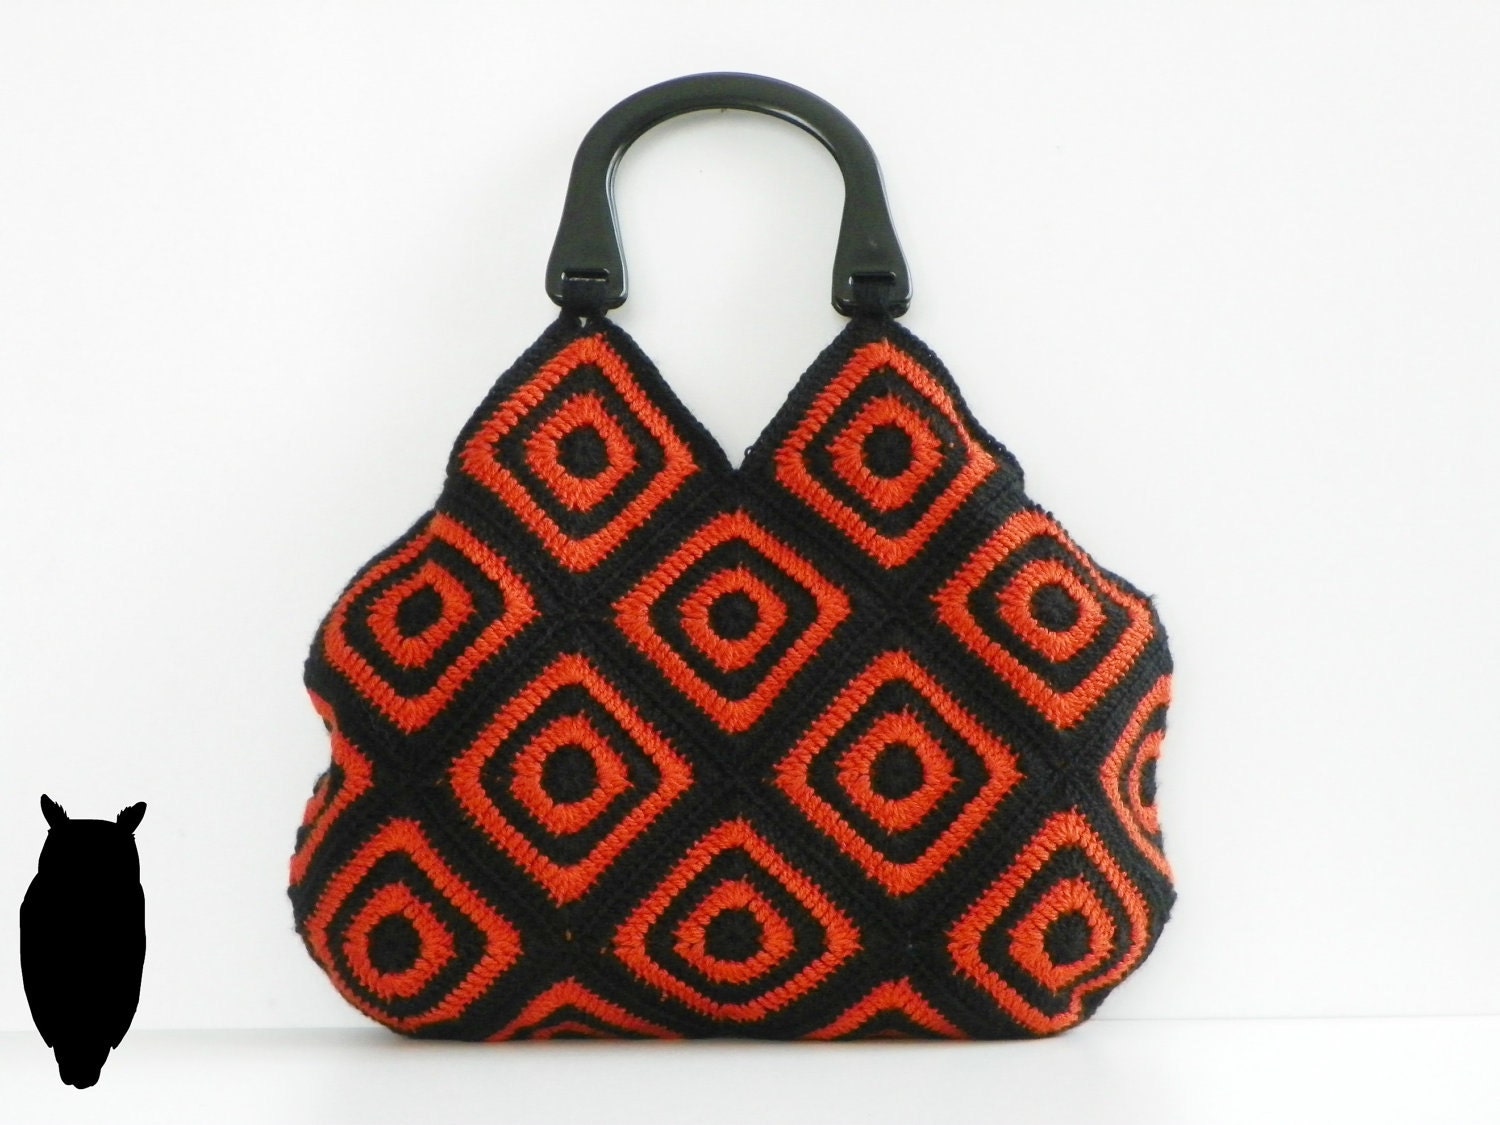 NzLbags Новый - Хэллоуин афганской сумка вязание крючком, сумки - Сумка Nr-0196